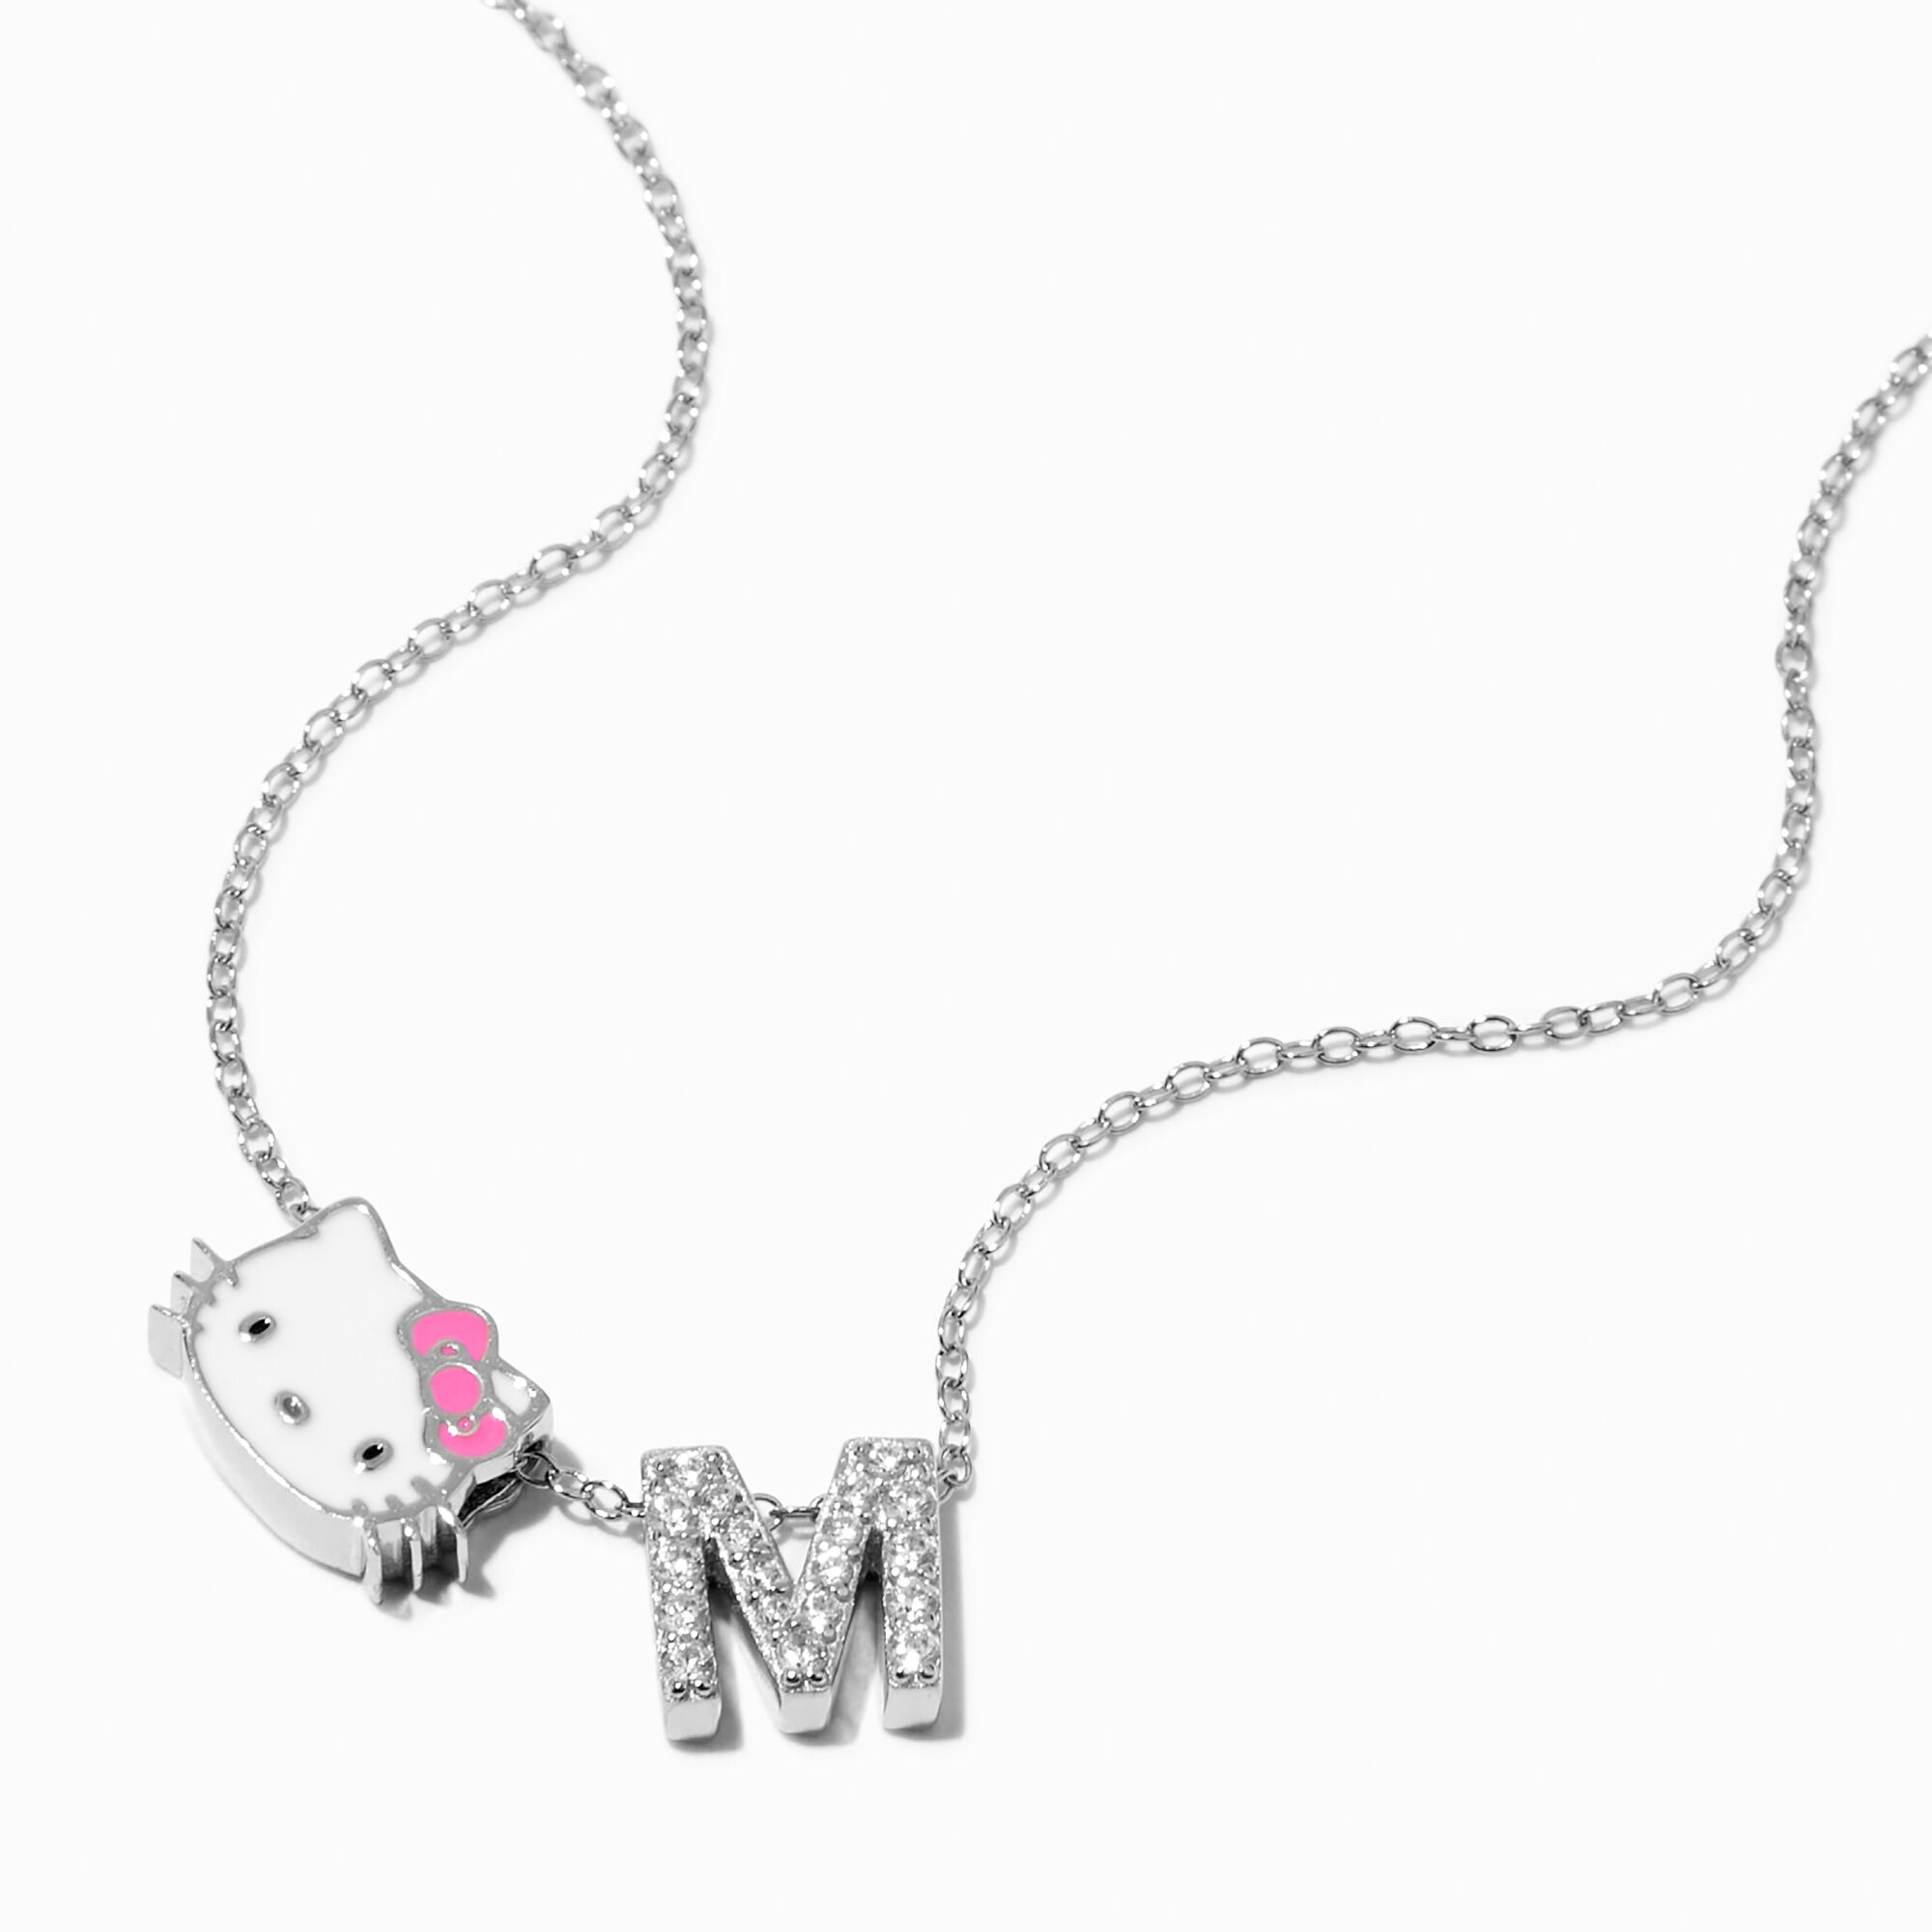 Macys Hello Kitty Crystal Sterling Necklace | eBay